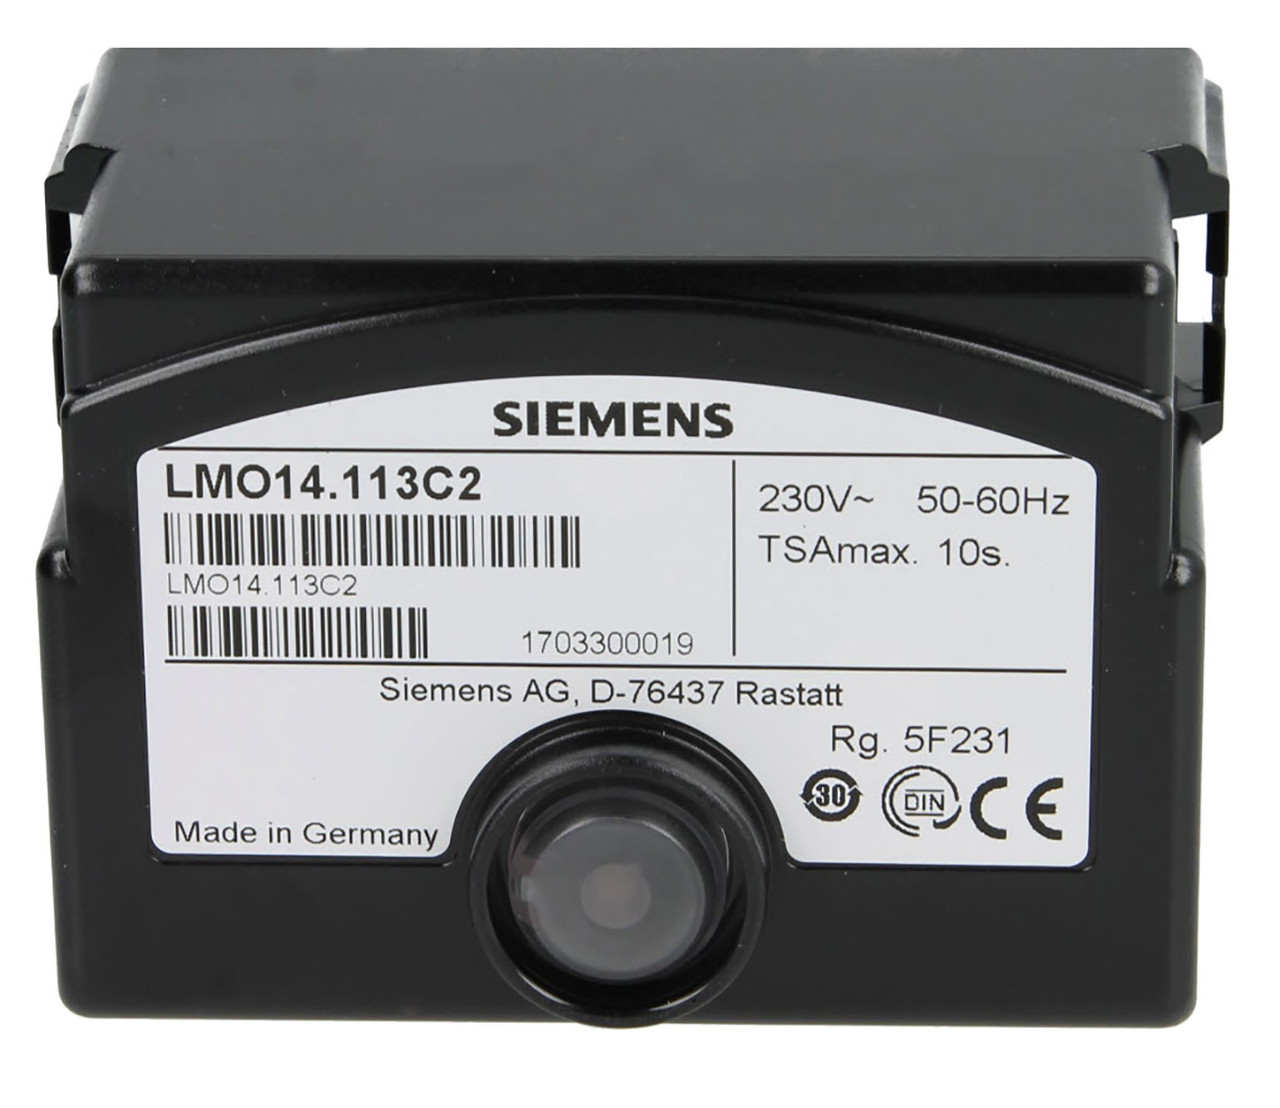 SIEMENSLMO14.113C2 oil burner controller